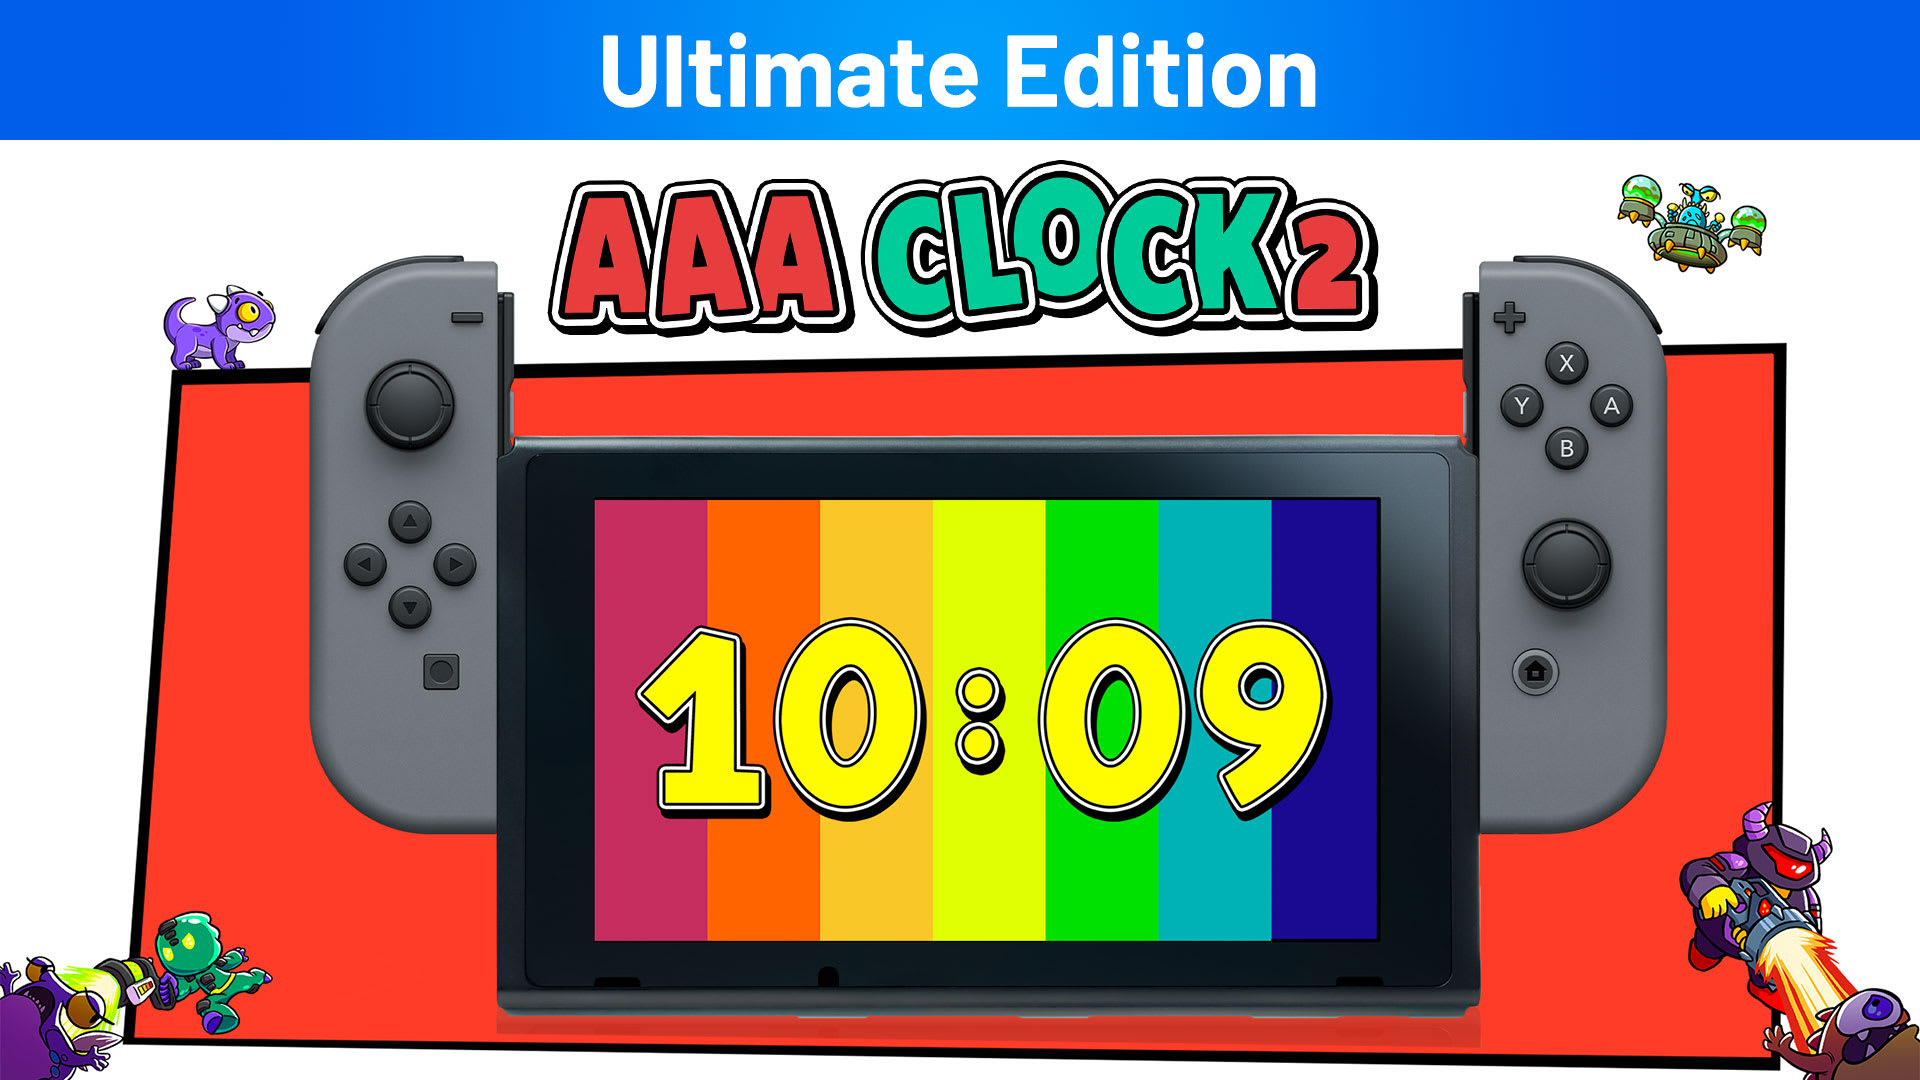 AAA Clock 2 Ultimate Edition